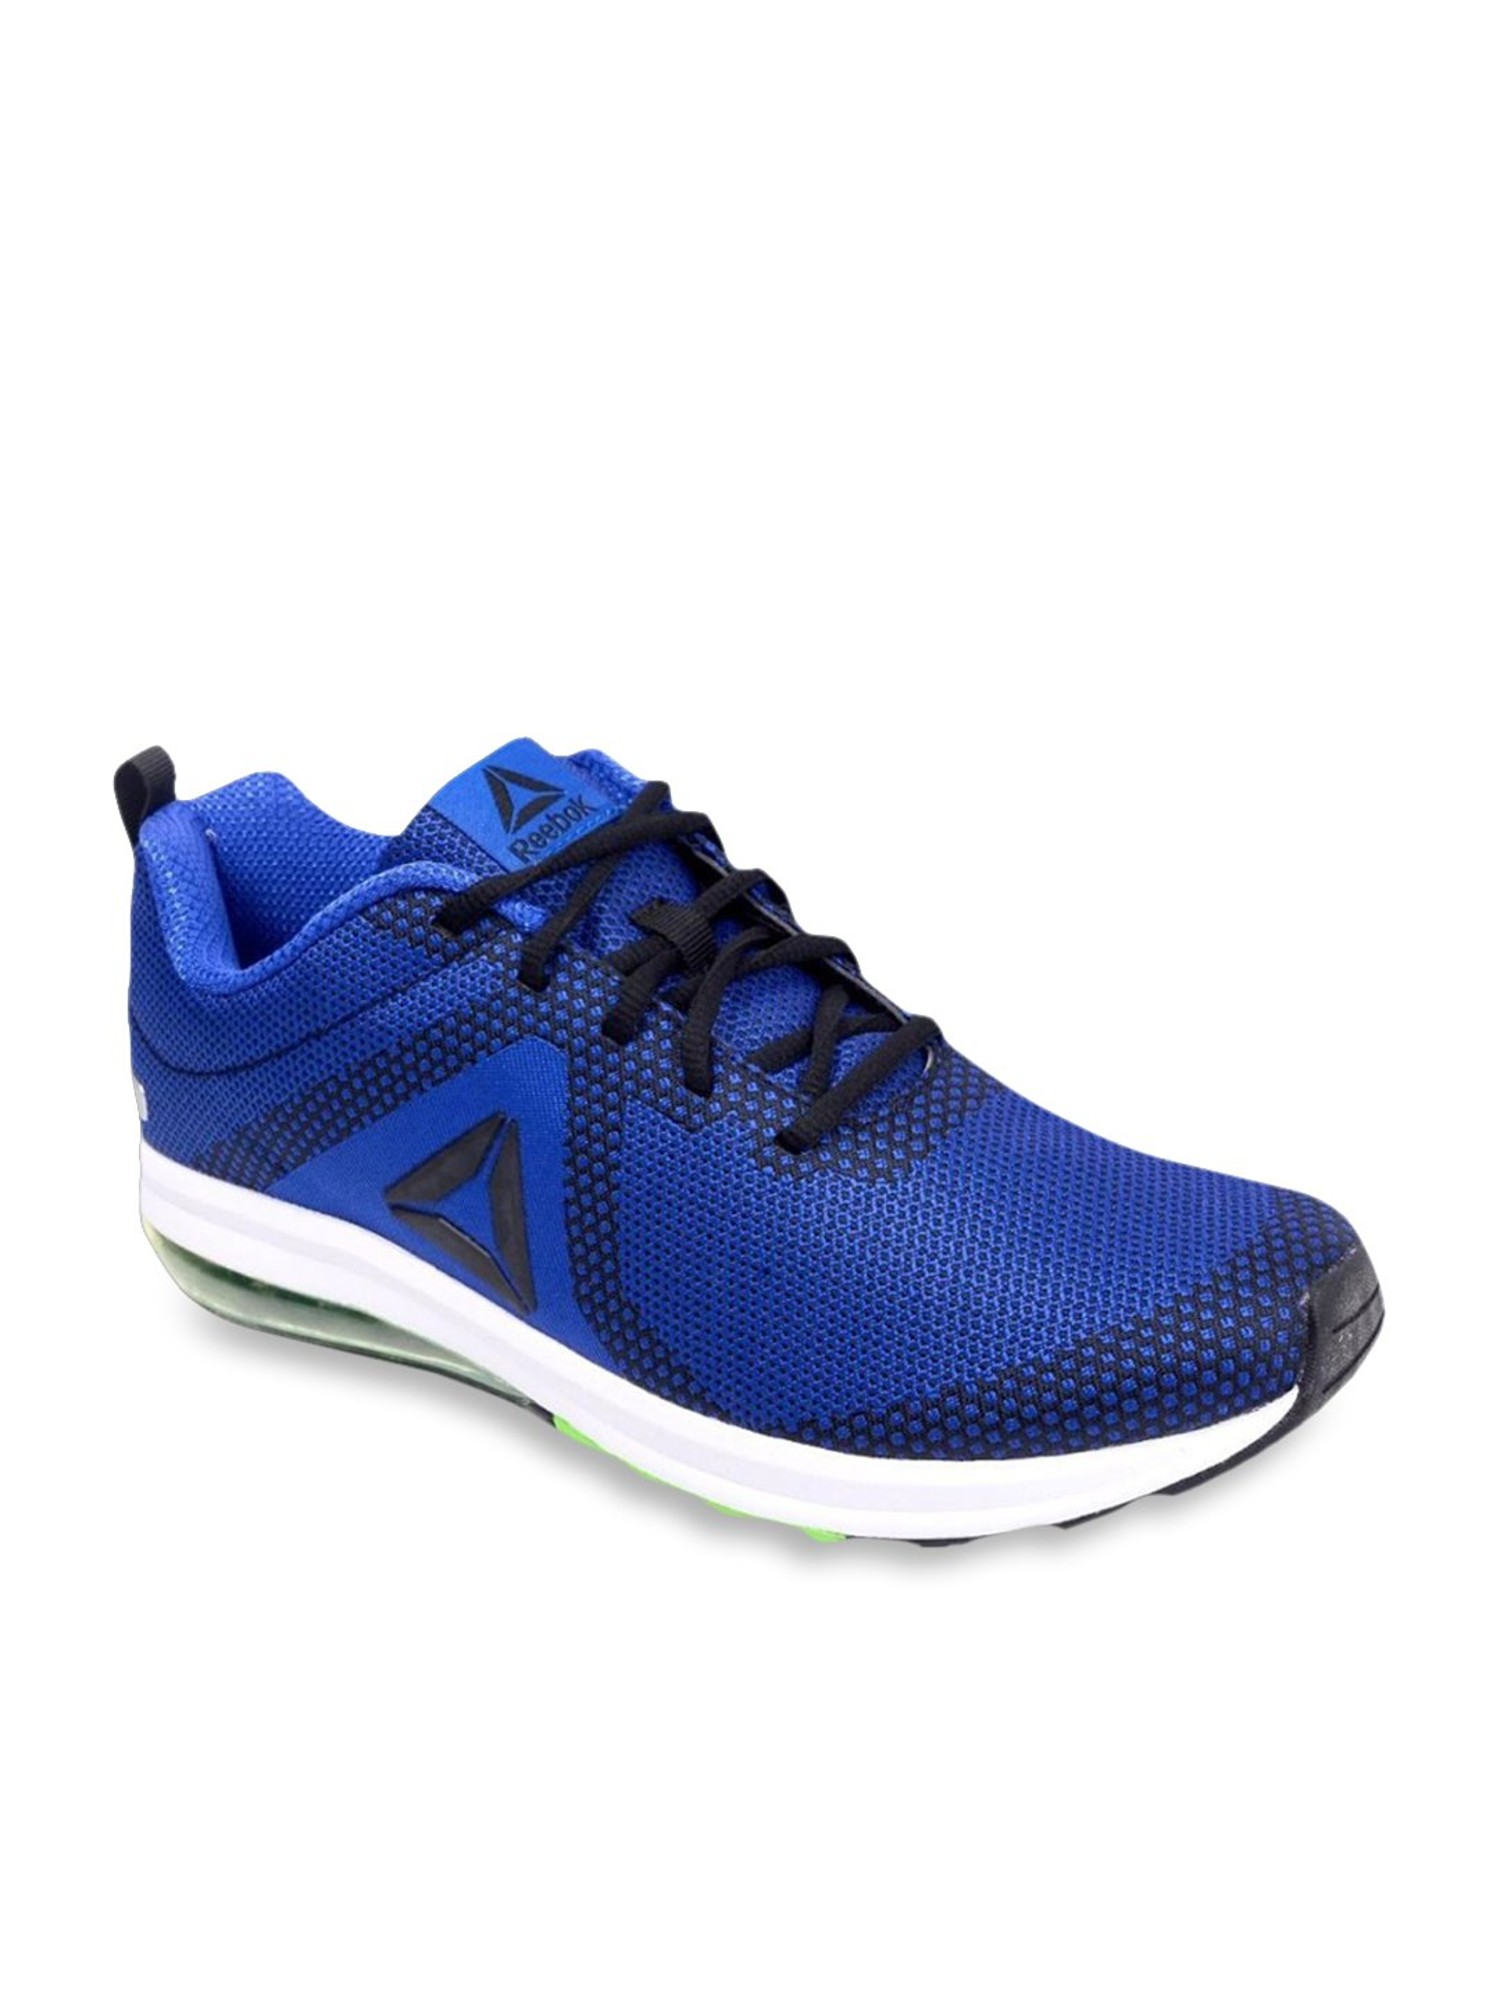 reebok jet dashride 6.0 blue running shoes